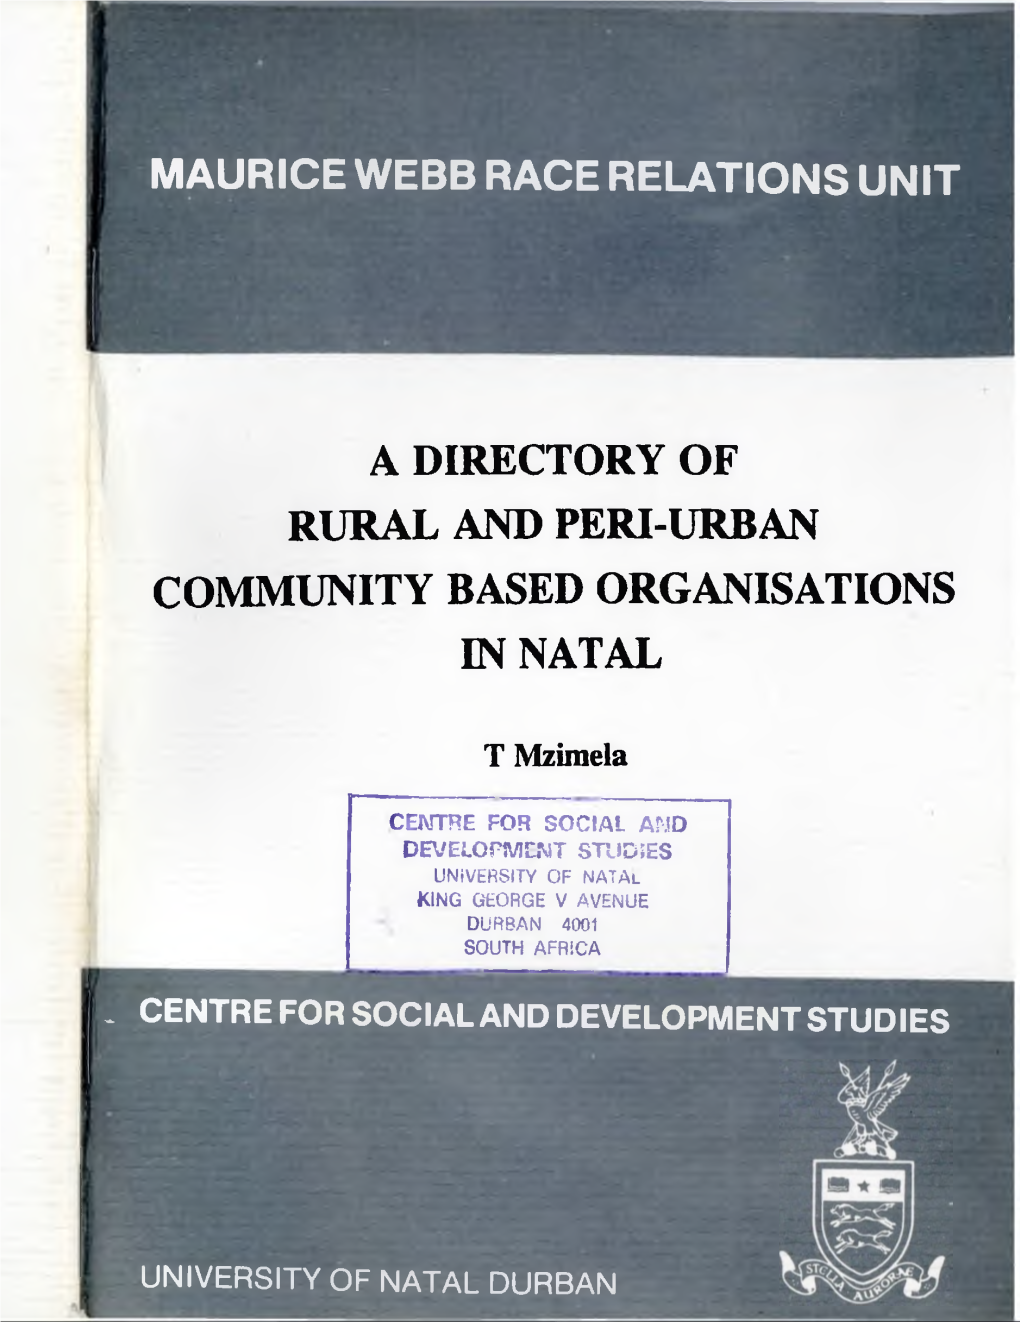 Maurice Webb Race Relations Unit